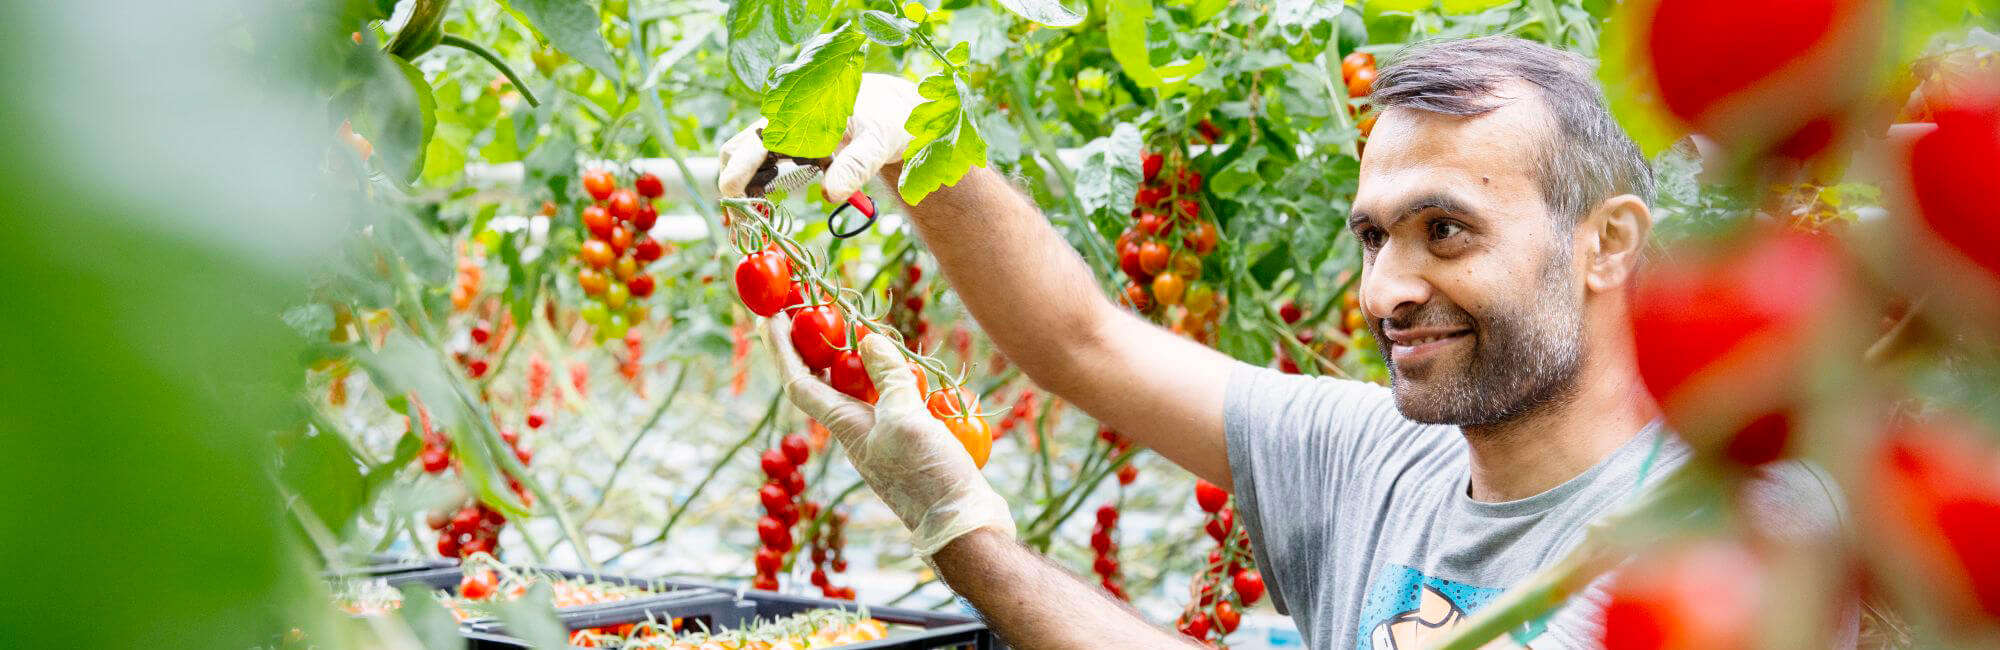 persoon plukt tomaten in veld